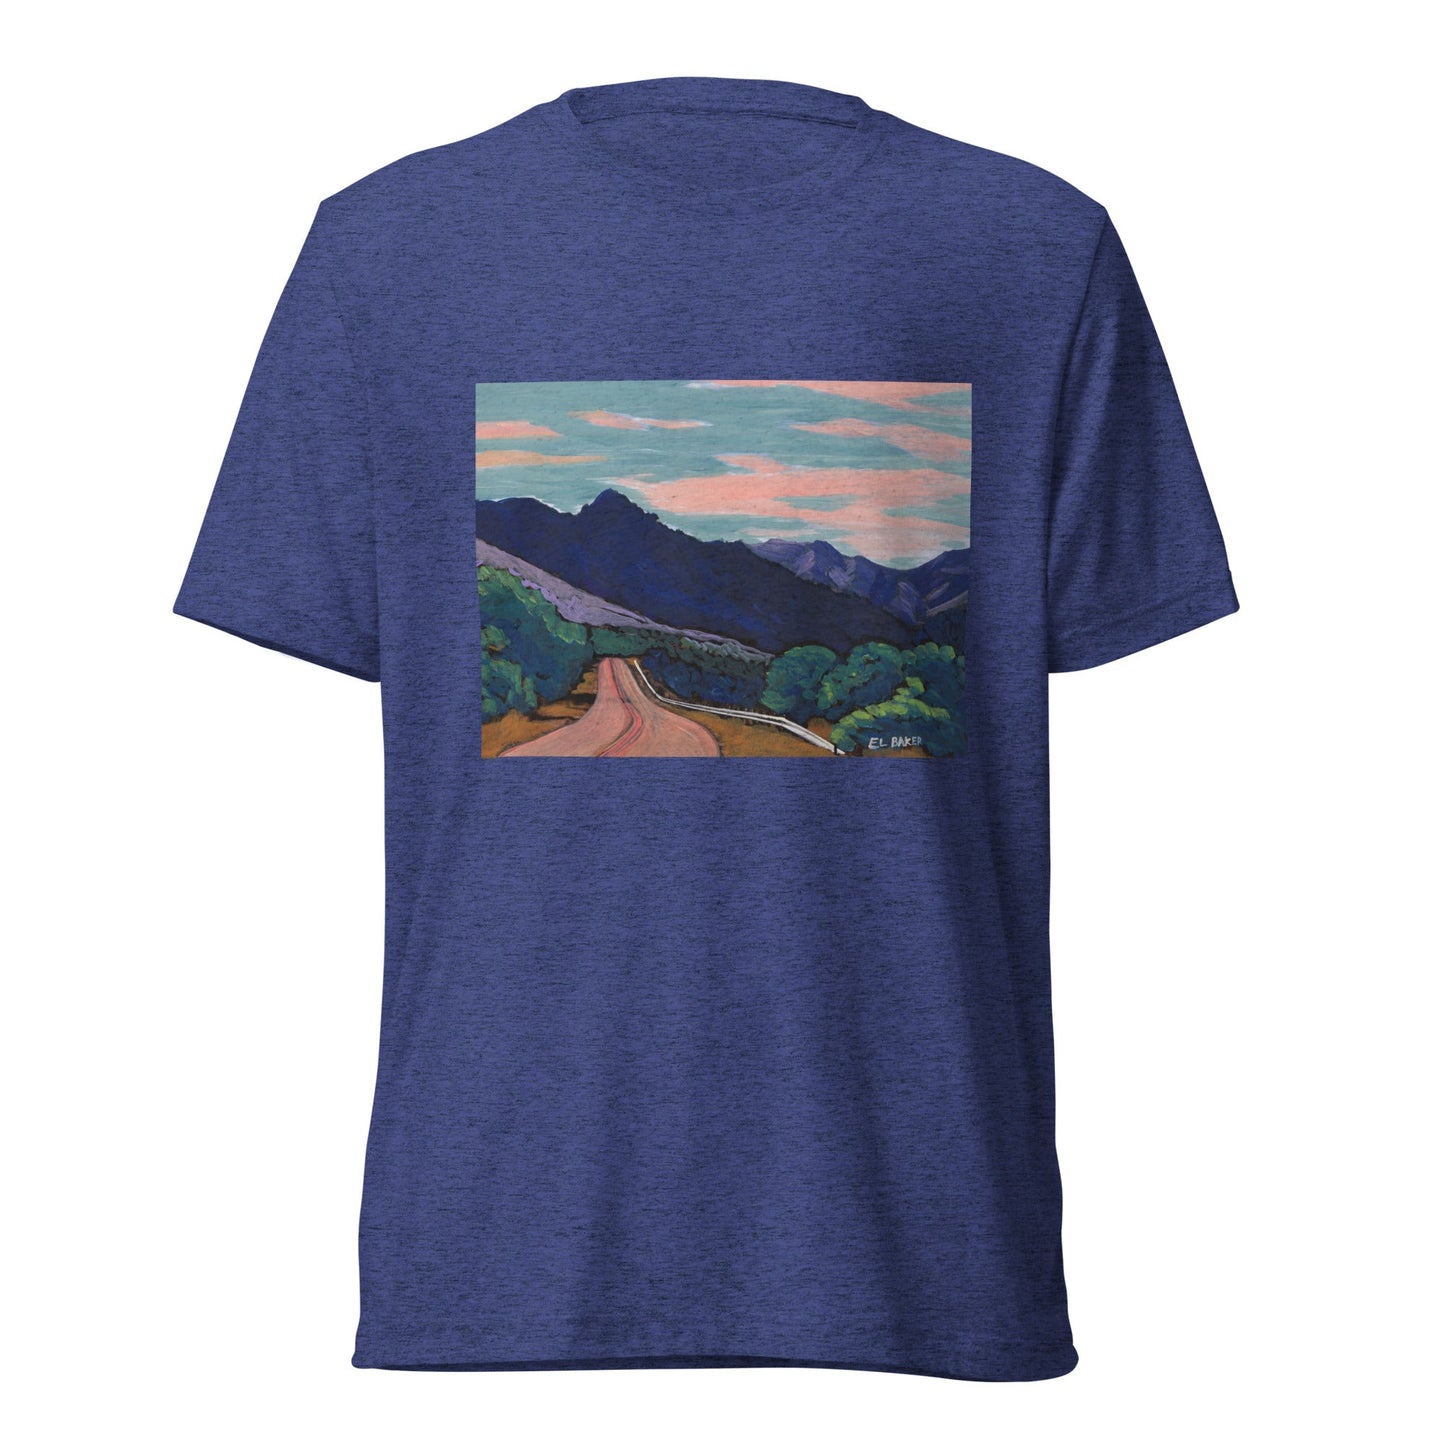 West Texas Highway T-Shirt - El Baker Art